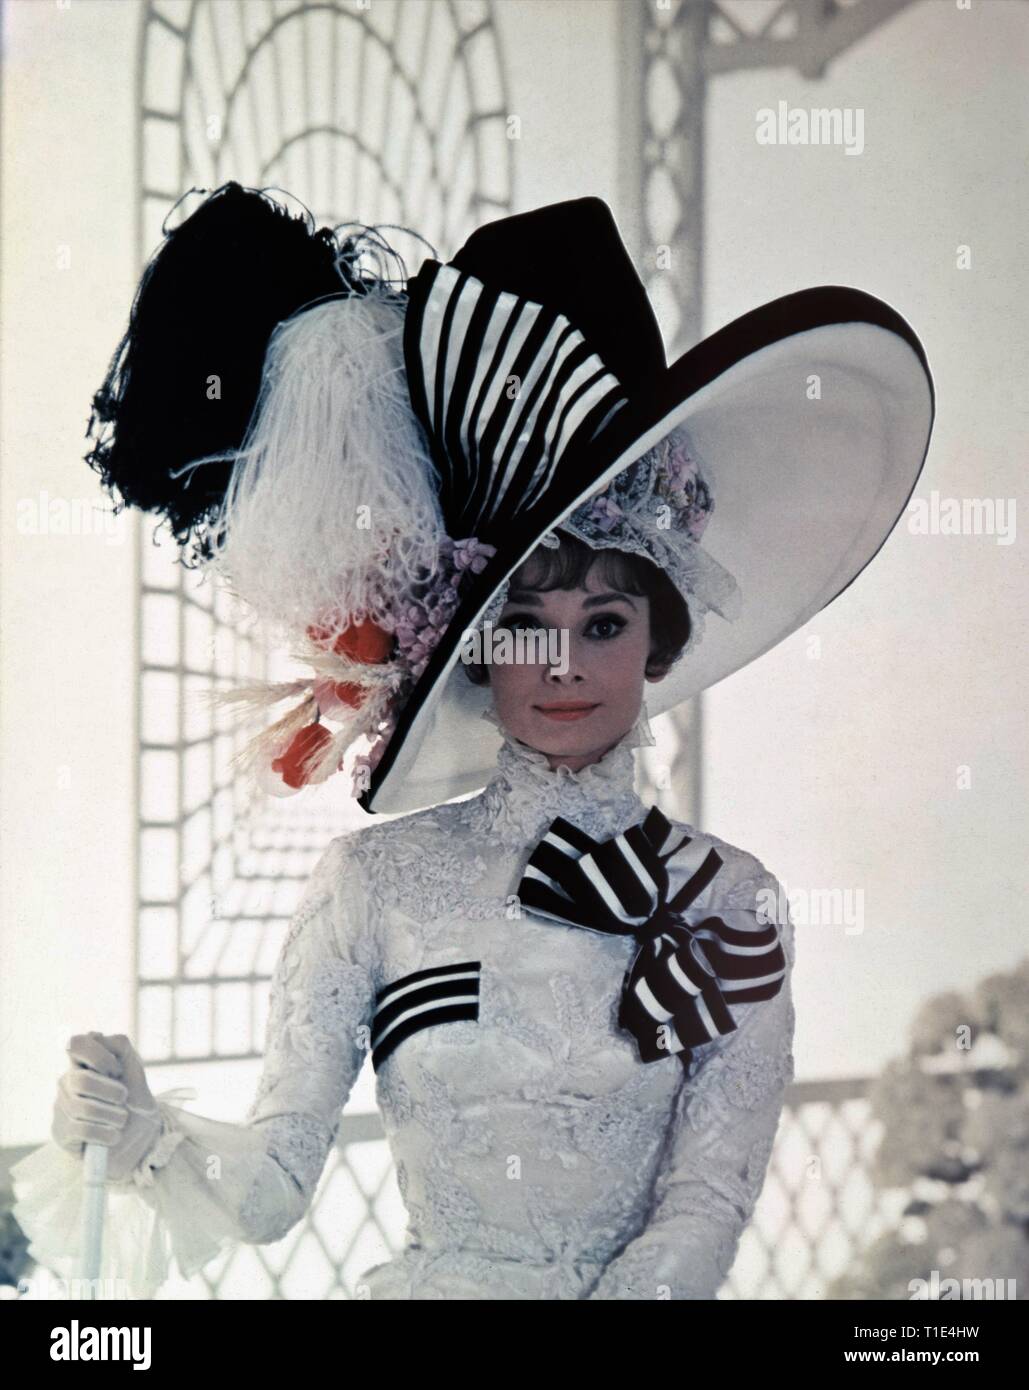 Audrey Hepburn As Eliza Doolittle My Fair Lady 1964 Director George Cukor Ascot Races Costume By